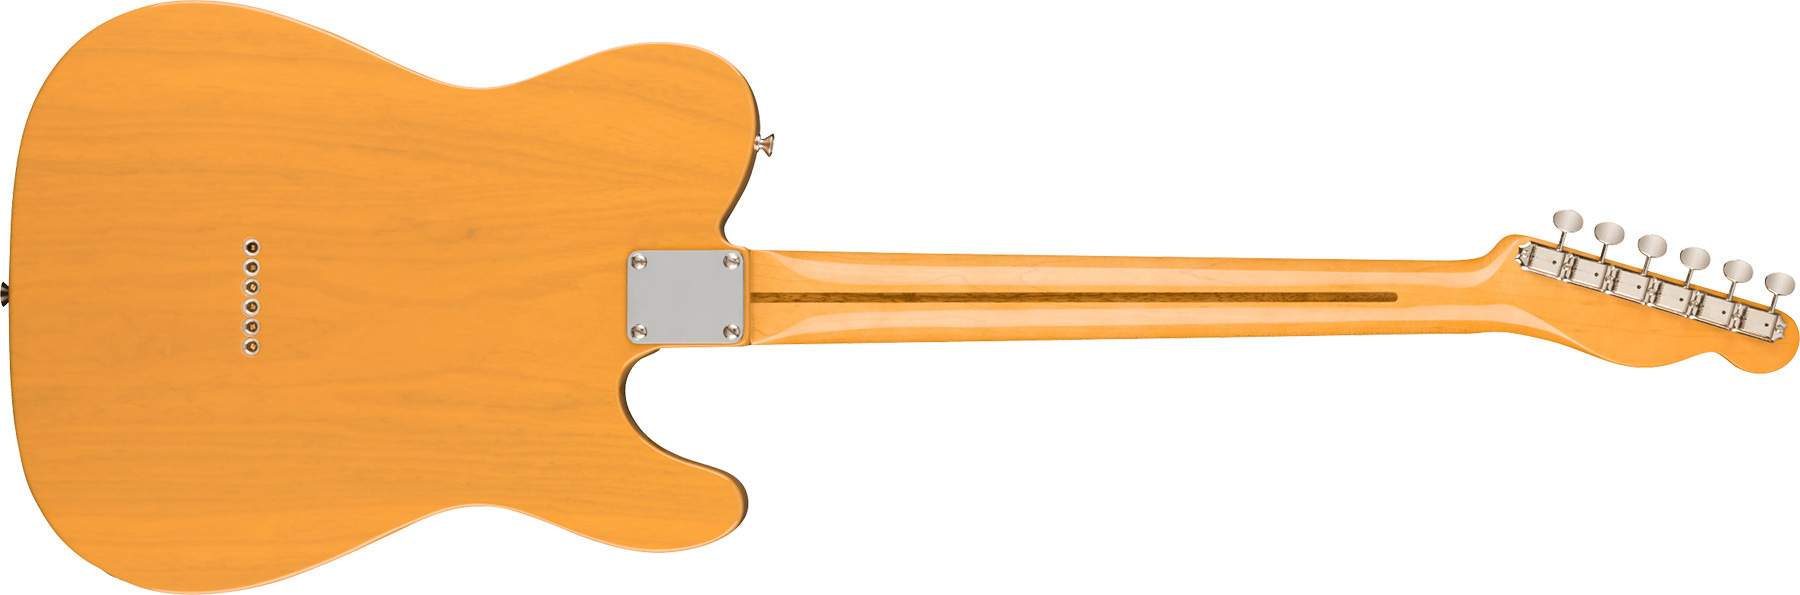 Fender Tele 1951 American Vintage Ii Lh Gaucher 2s Ht Mn - Butterscotch Blonde - Left-handed electric guitar - Variation 1